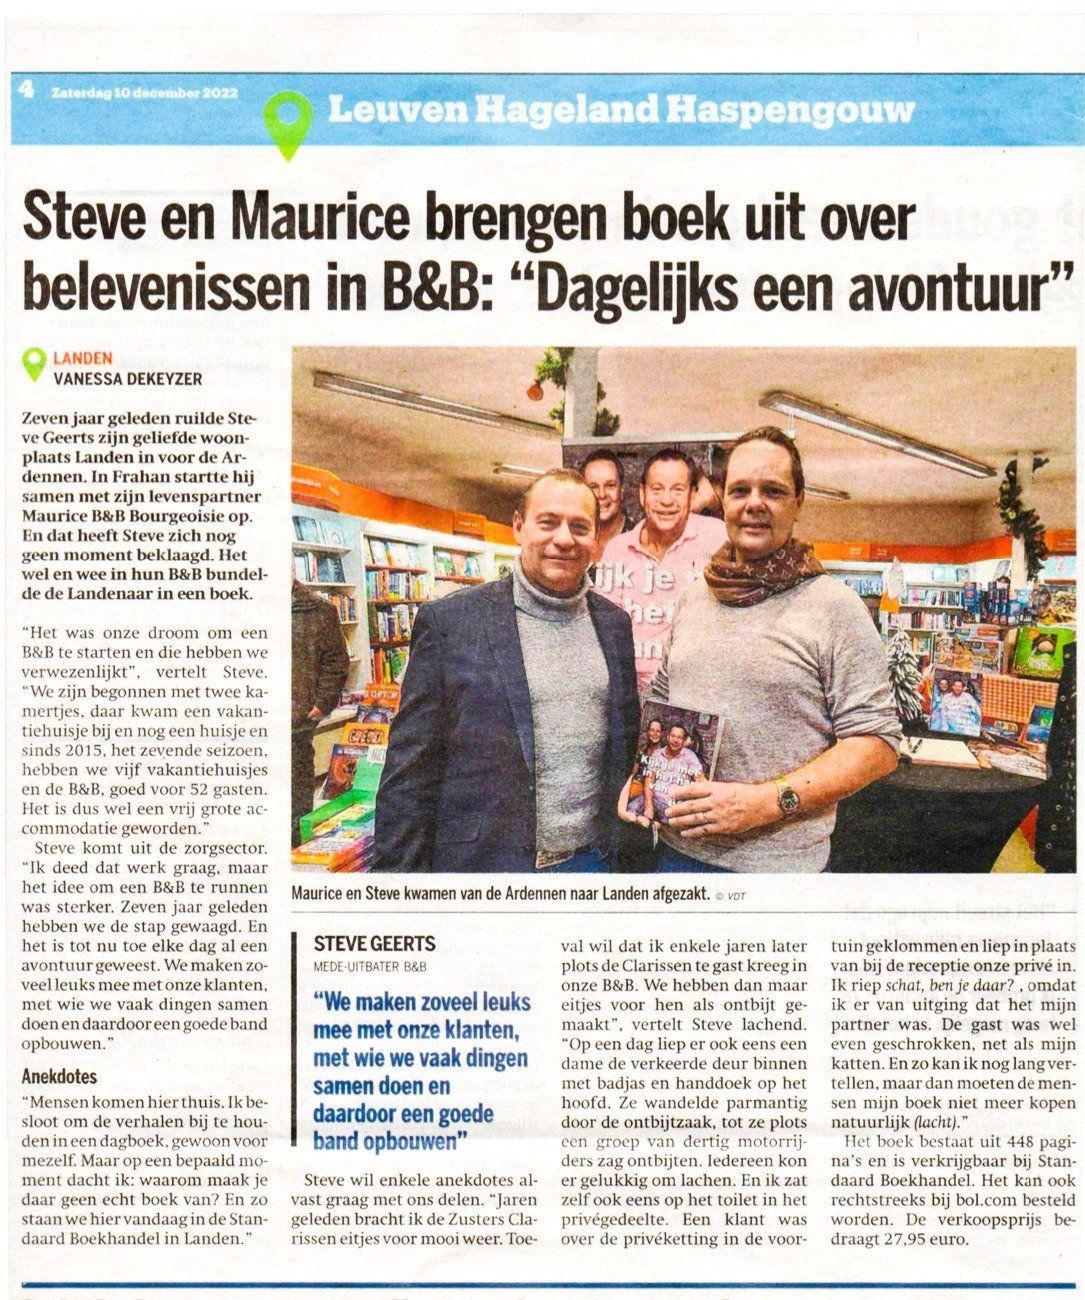 Boek Vlaamse auteur Steve Geerts Kerst best verkopende boek Belgie Nederland Beste boek 2022 2023